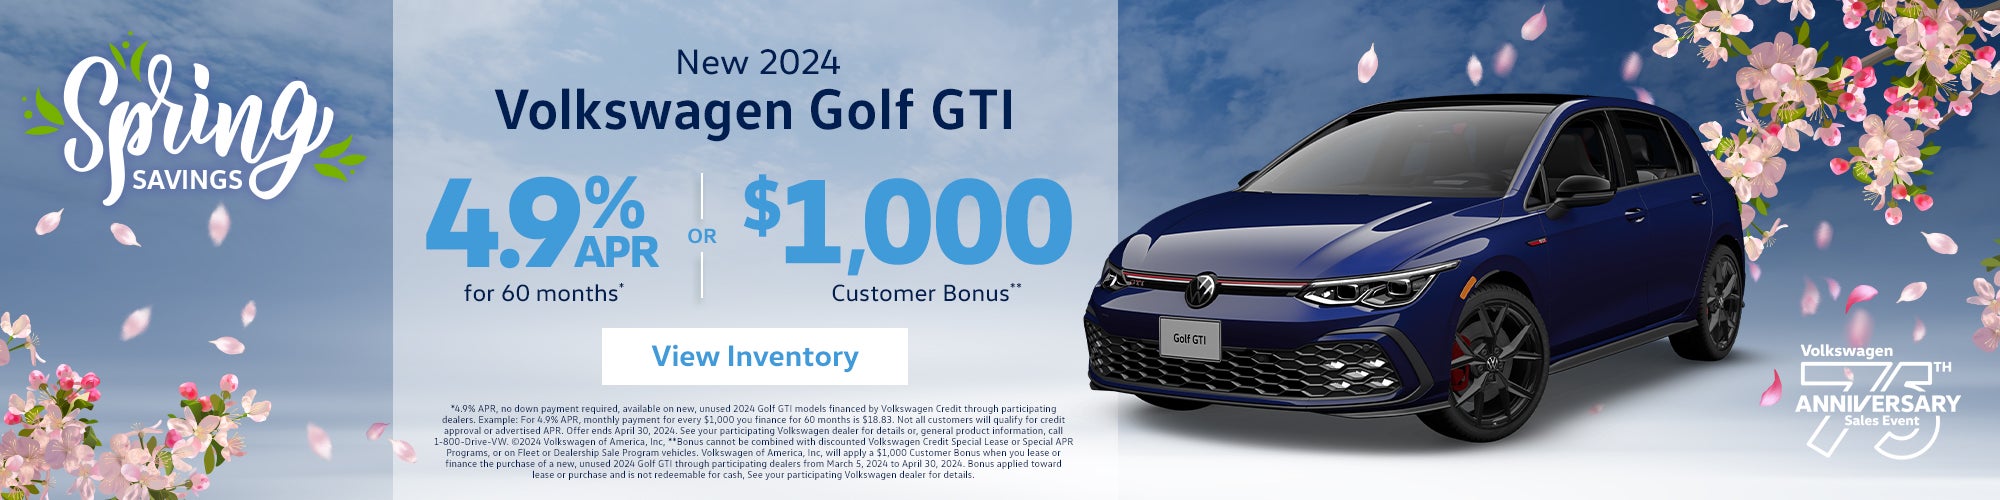 New 2024 Volkswagen Golf GTI